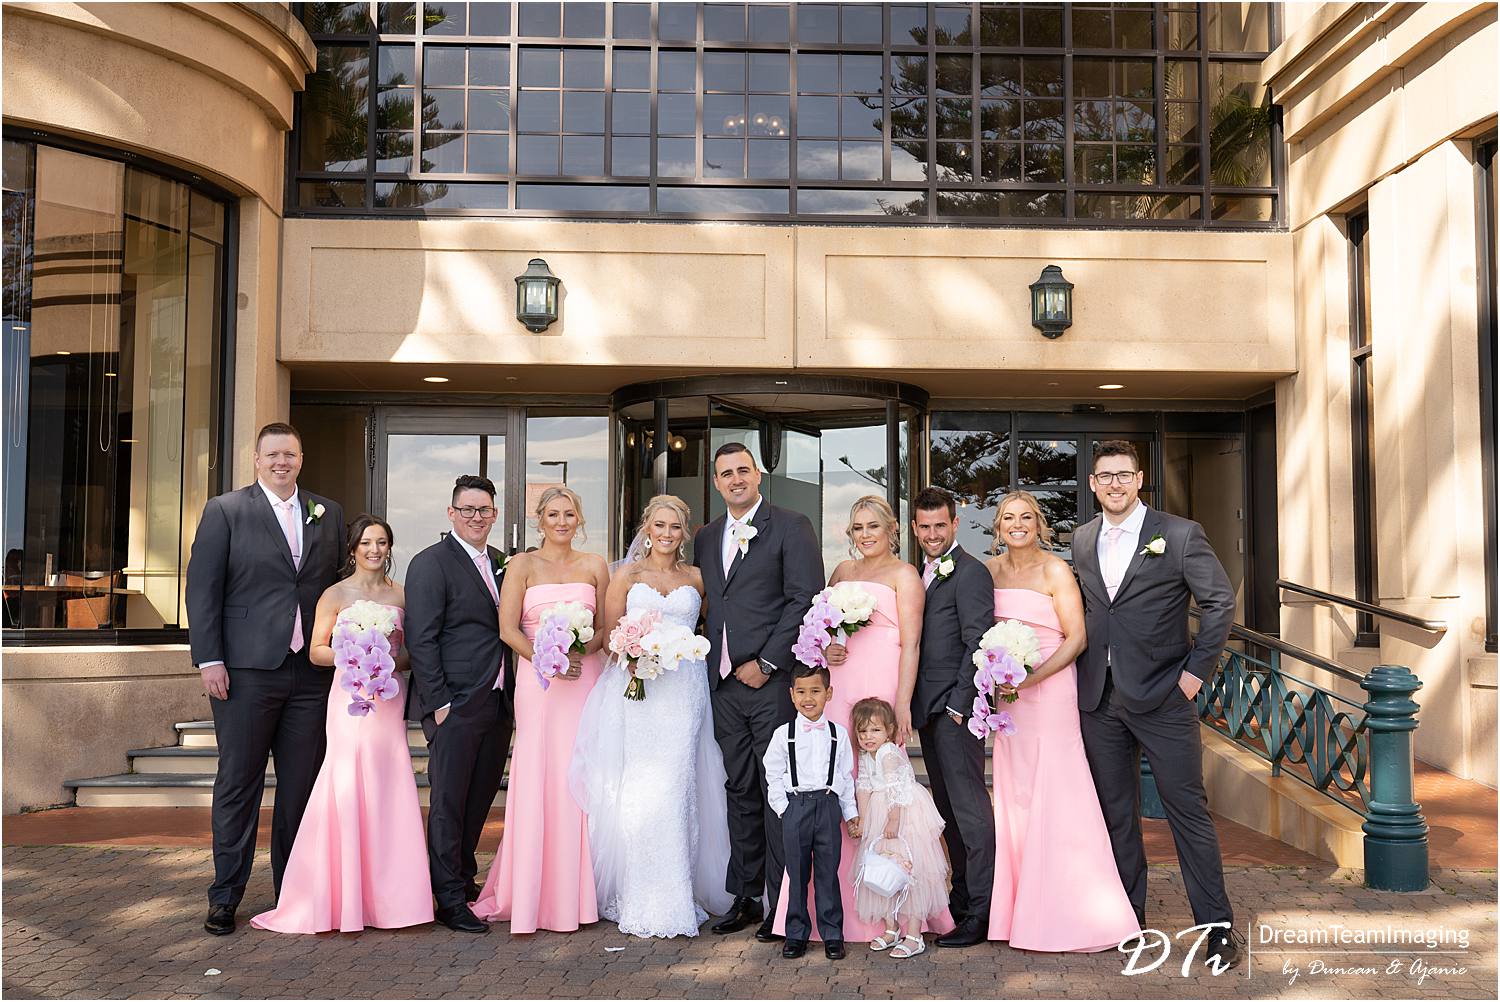 Bridal Party photos at Stamford Grand Adelaide